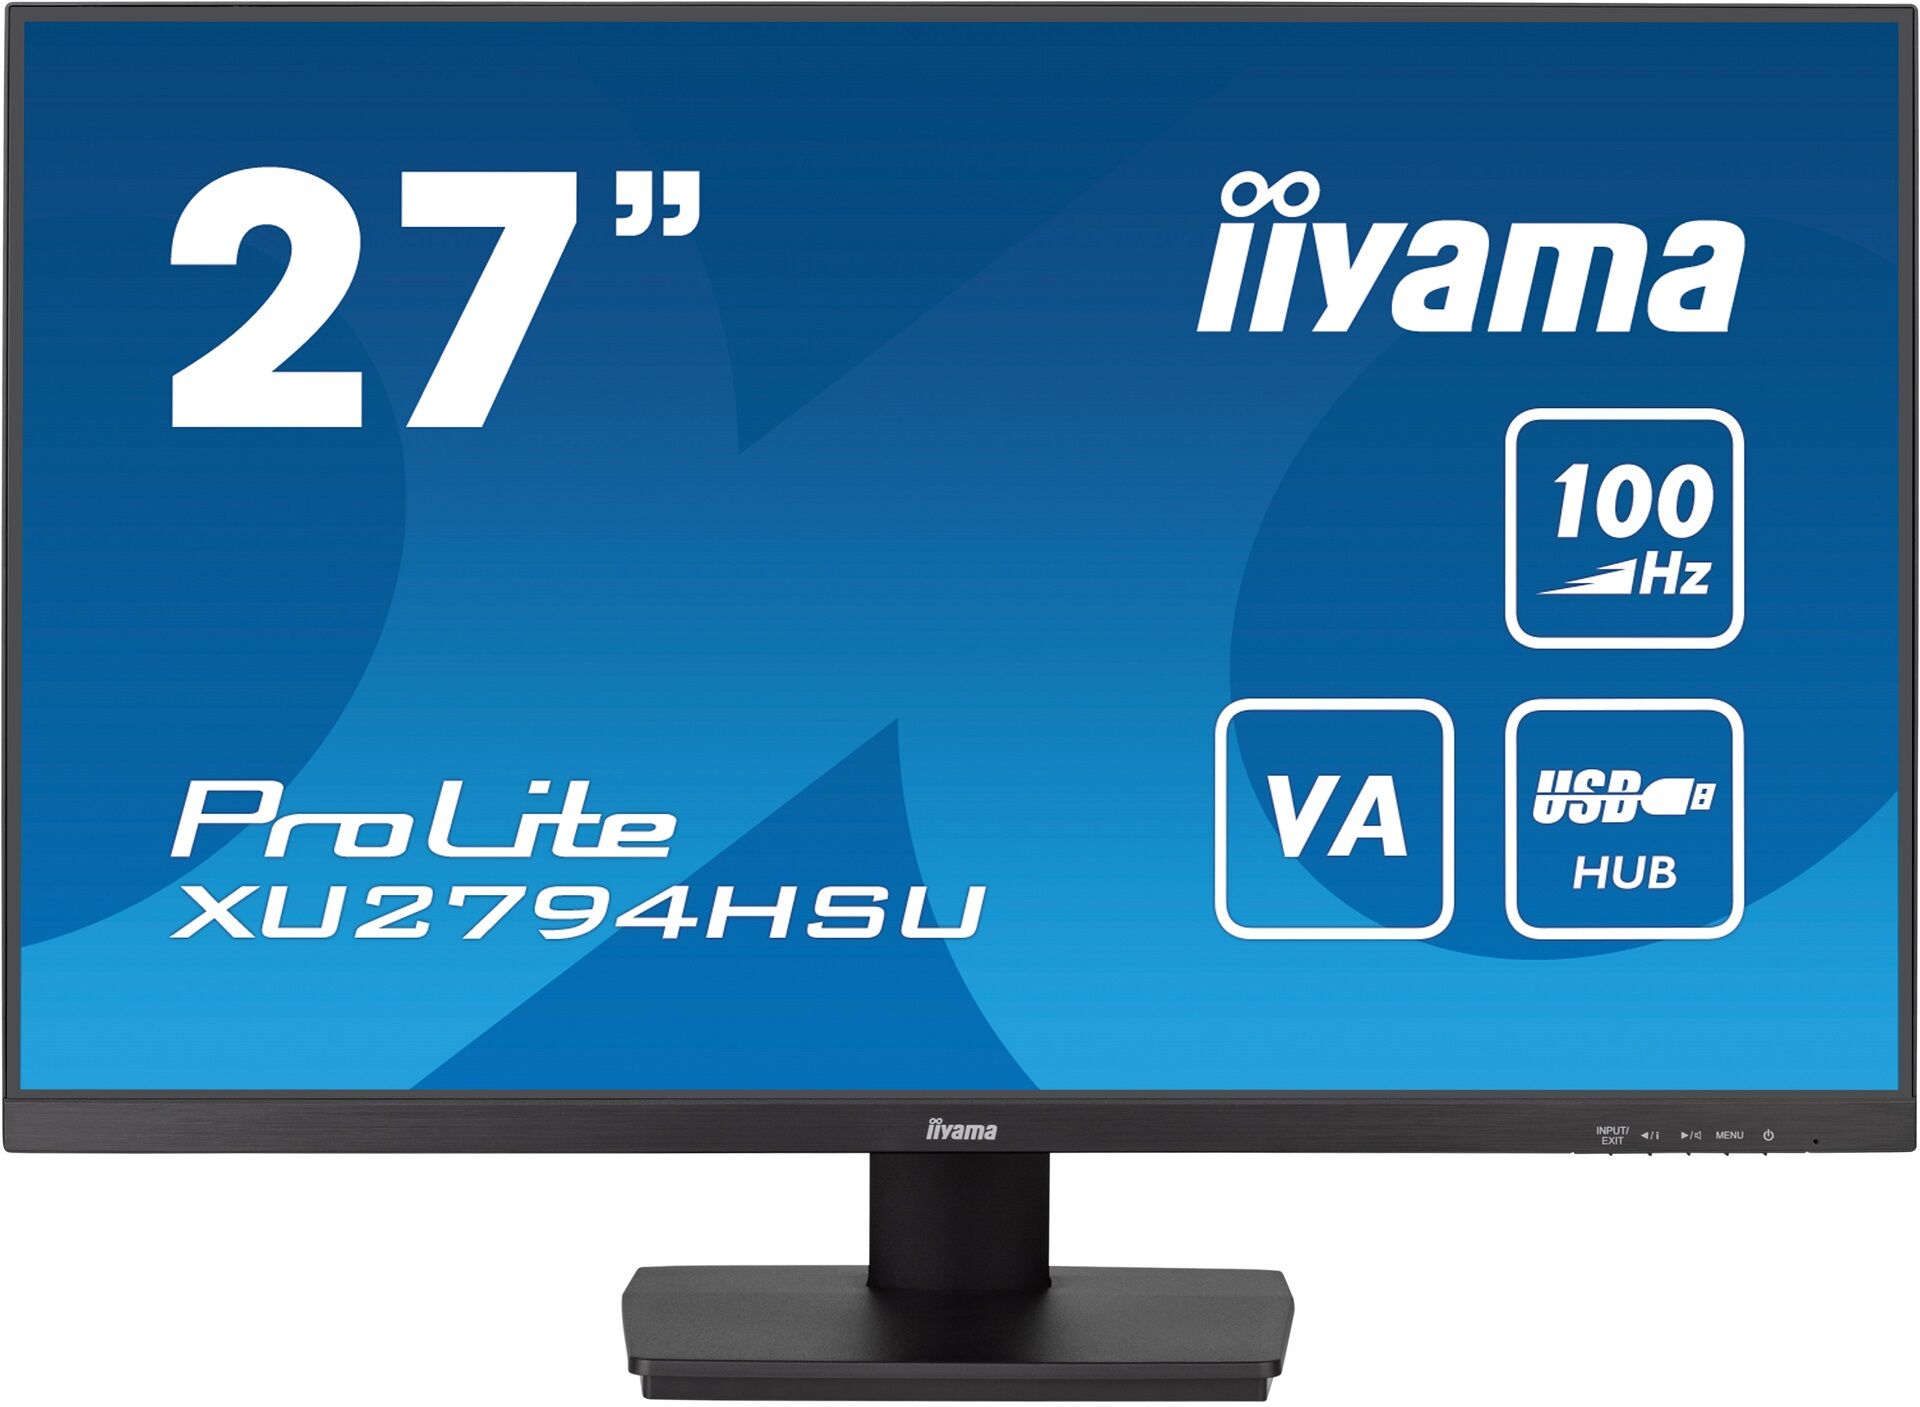 iiyama prezentuje nowe monitory ProLite 1